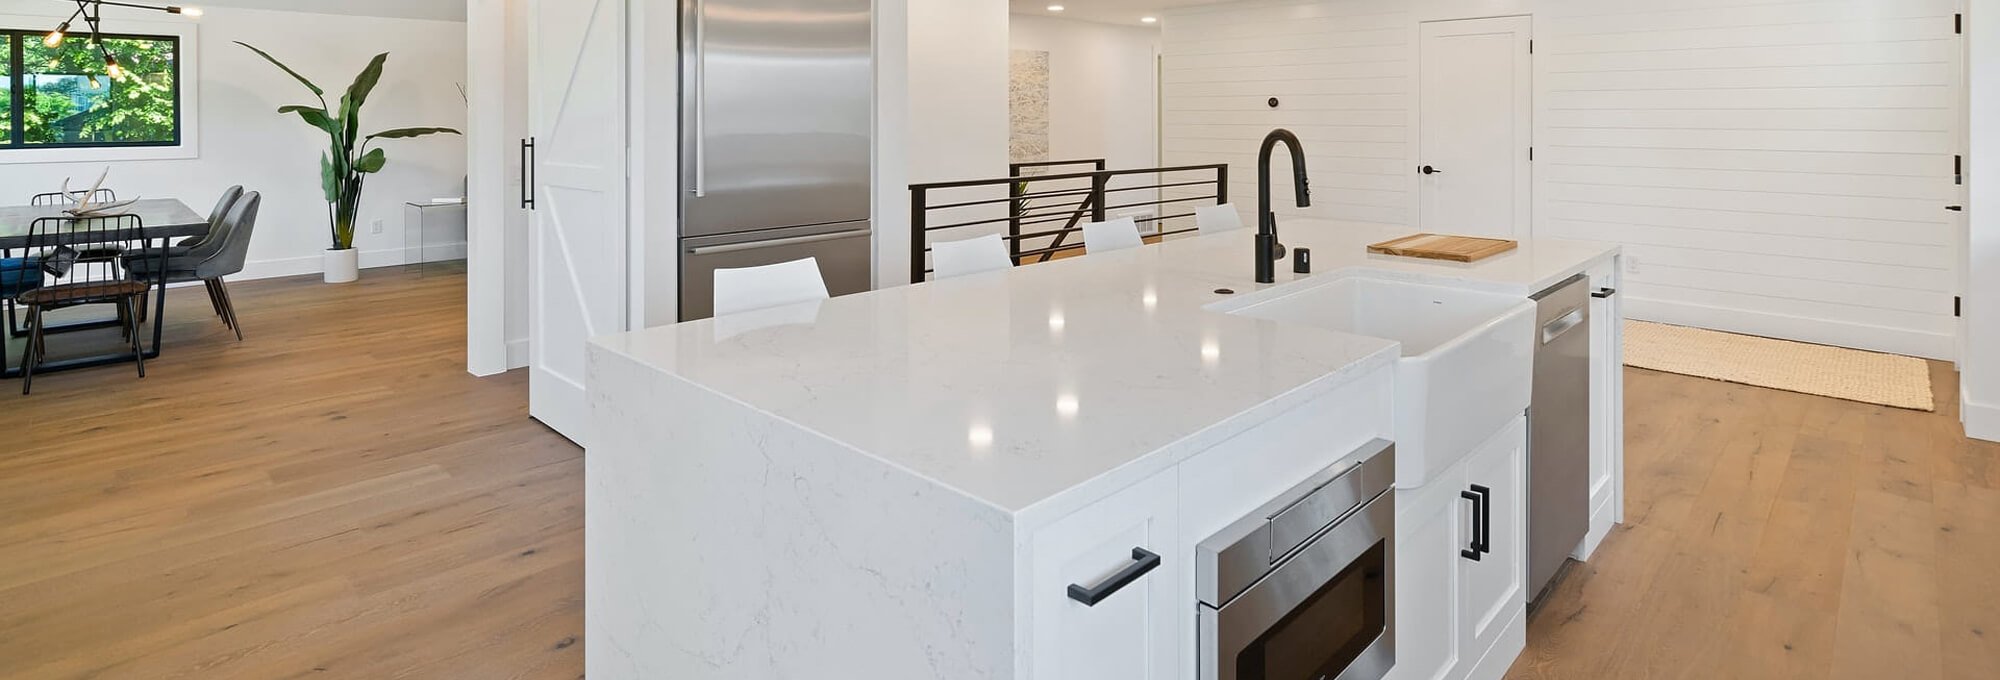 Modern all white kitchen with hardwood flooring from Richmond Flooring Showroom in Mount Pleasant, Utah